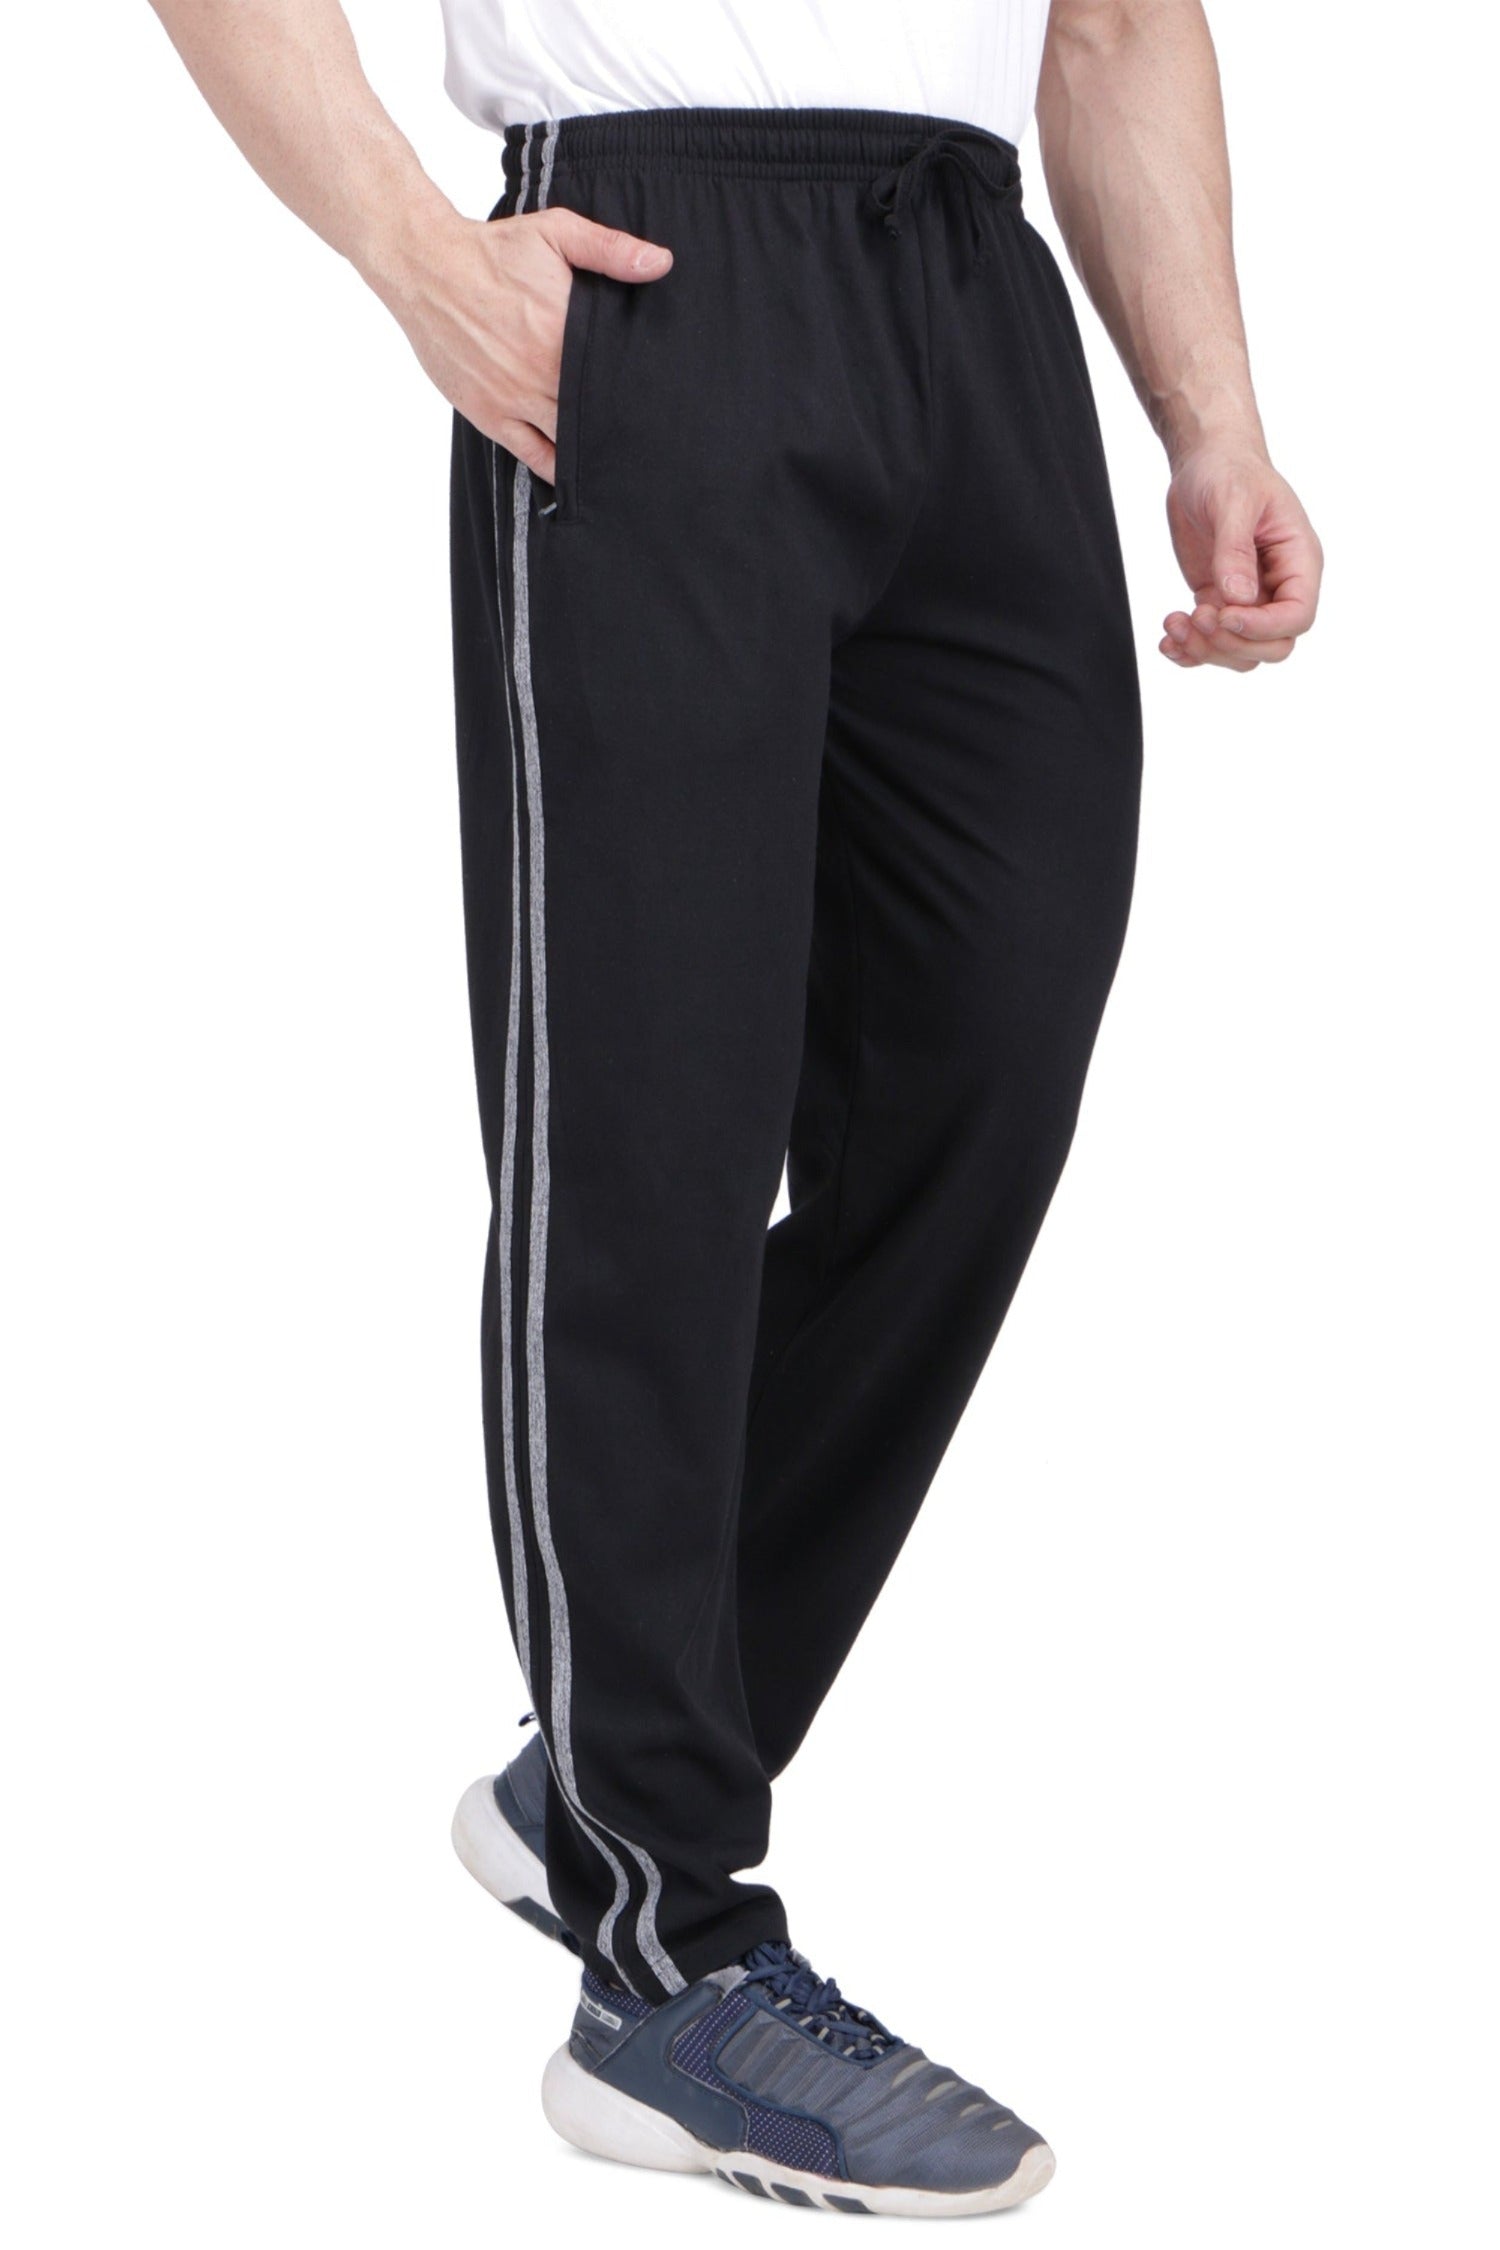 Regular Fit Fast-drying track pants - Black - Men | H&M IN